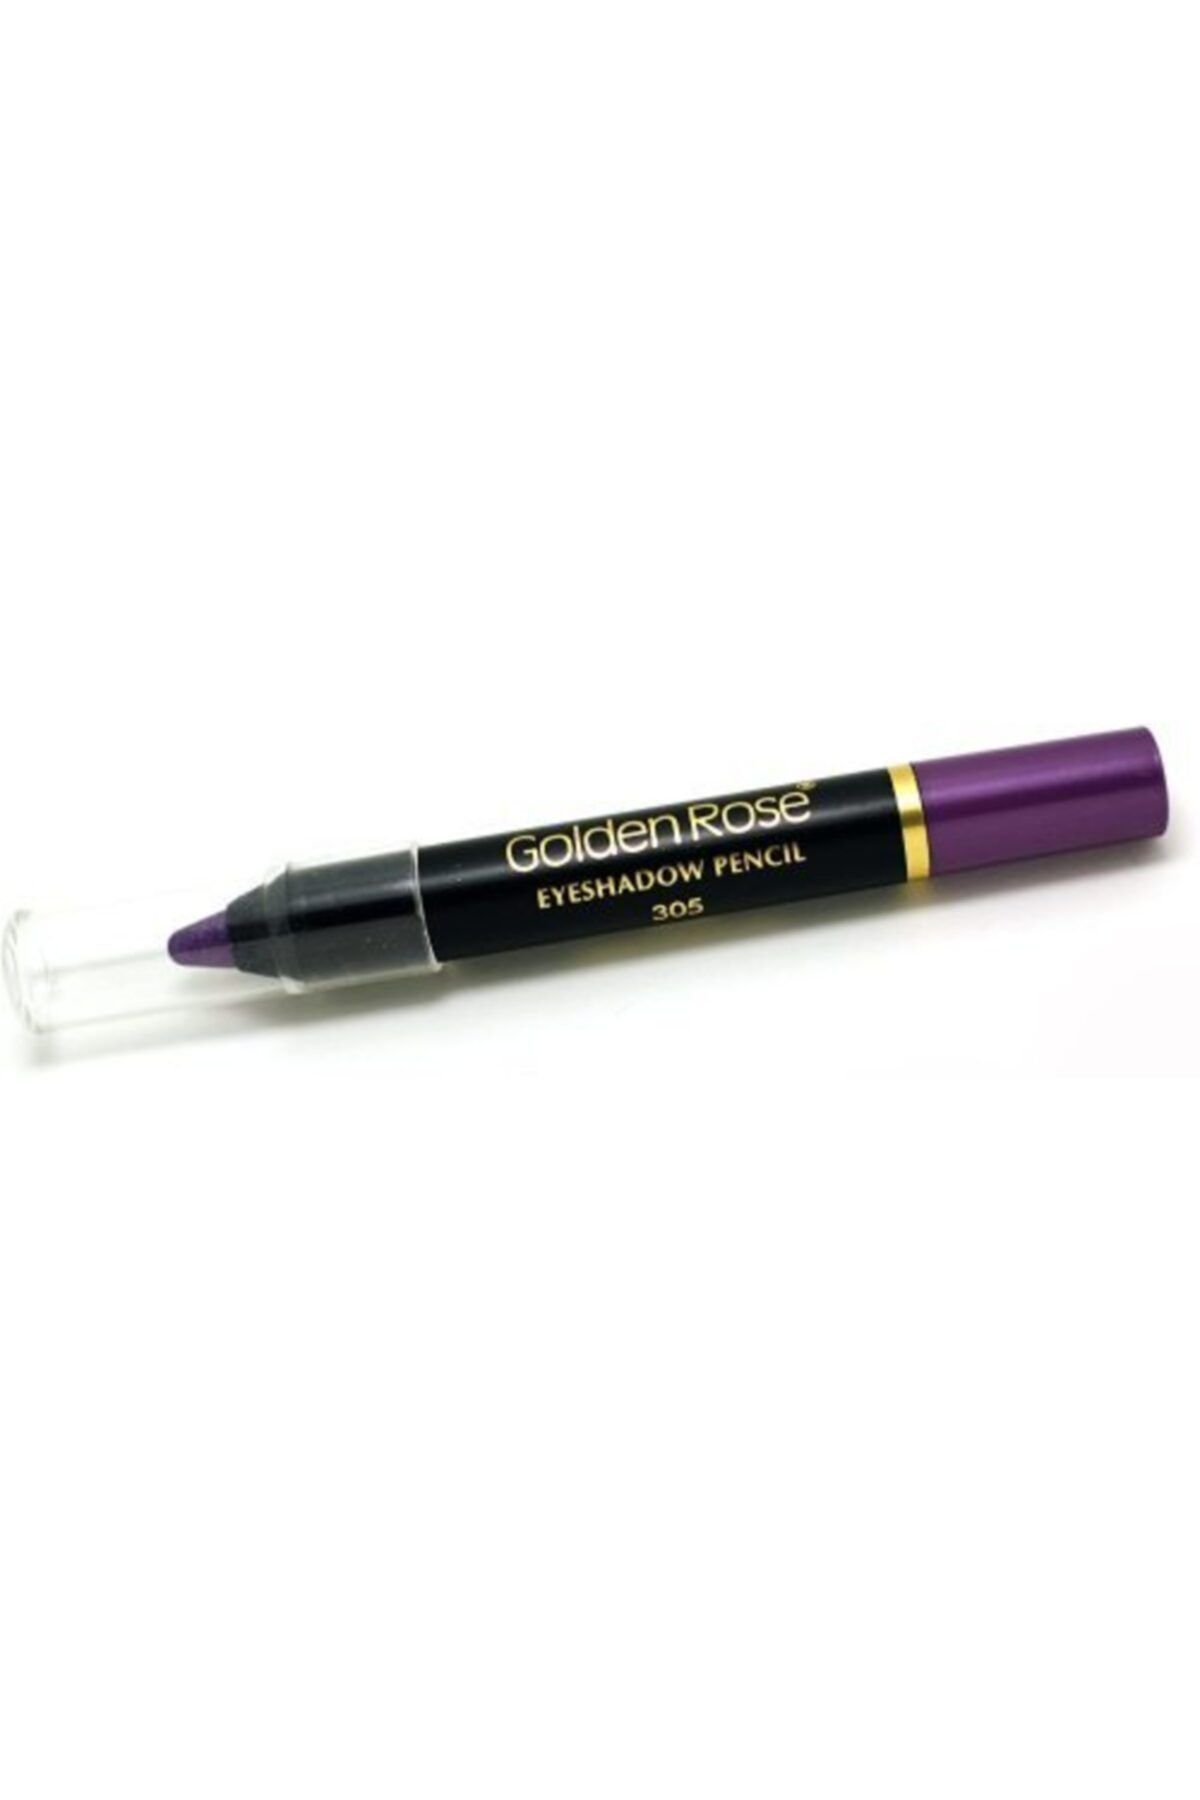 Golden Rose Jumbo Eyeshadow Pencil 305 Lavender Purple By